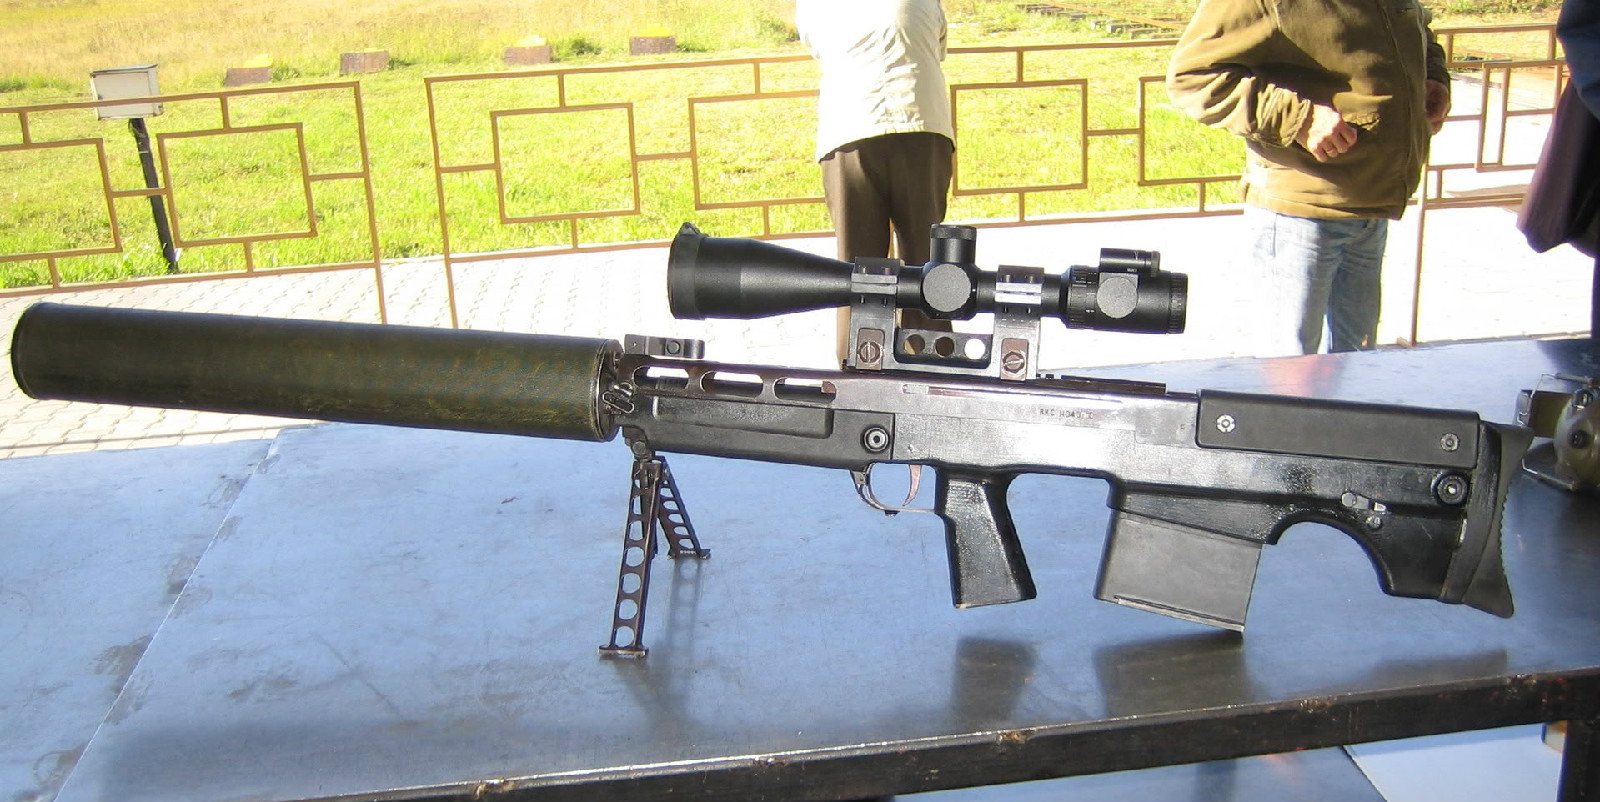 VSSK微聲狙擊步槍